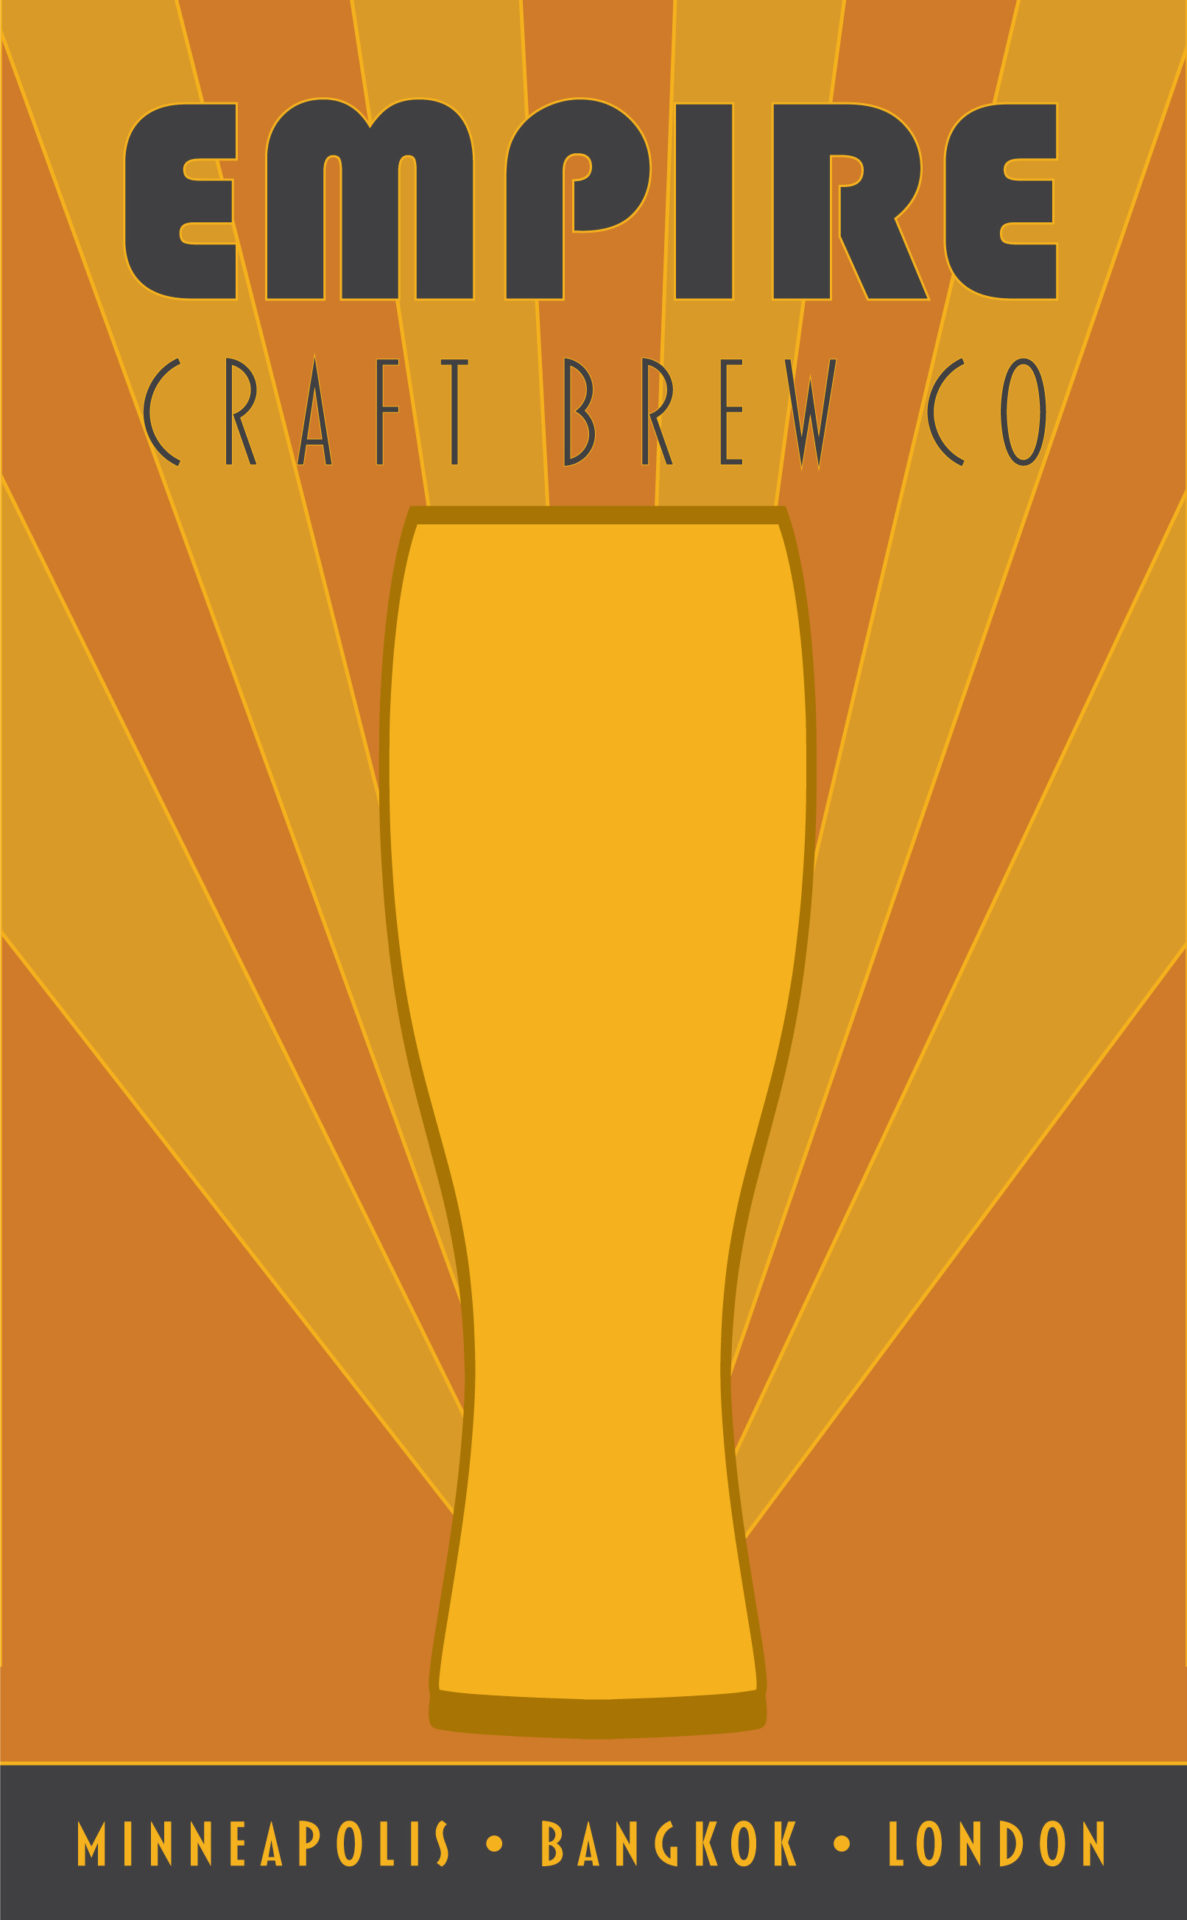 Empire Craft Brew Co. logo & branding